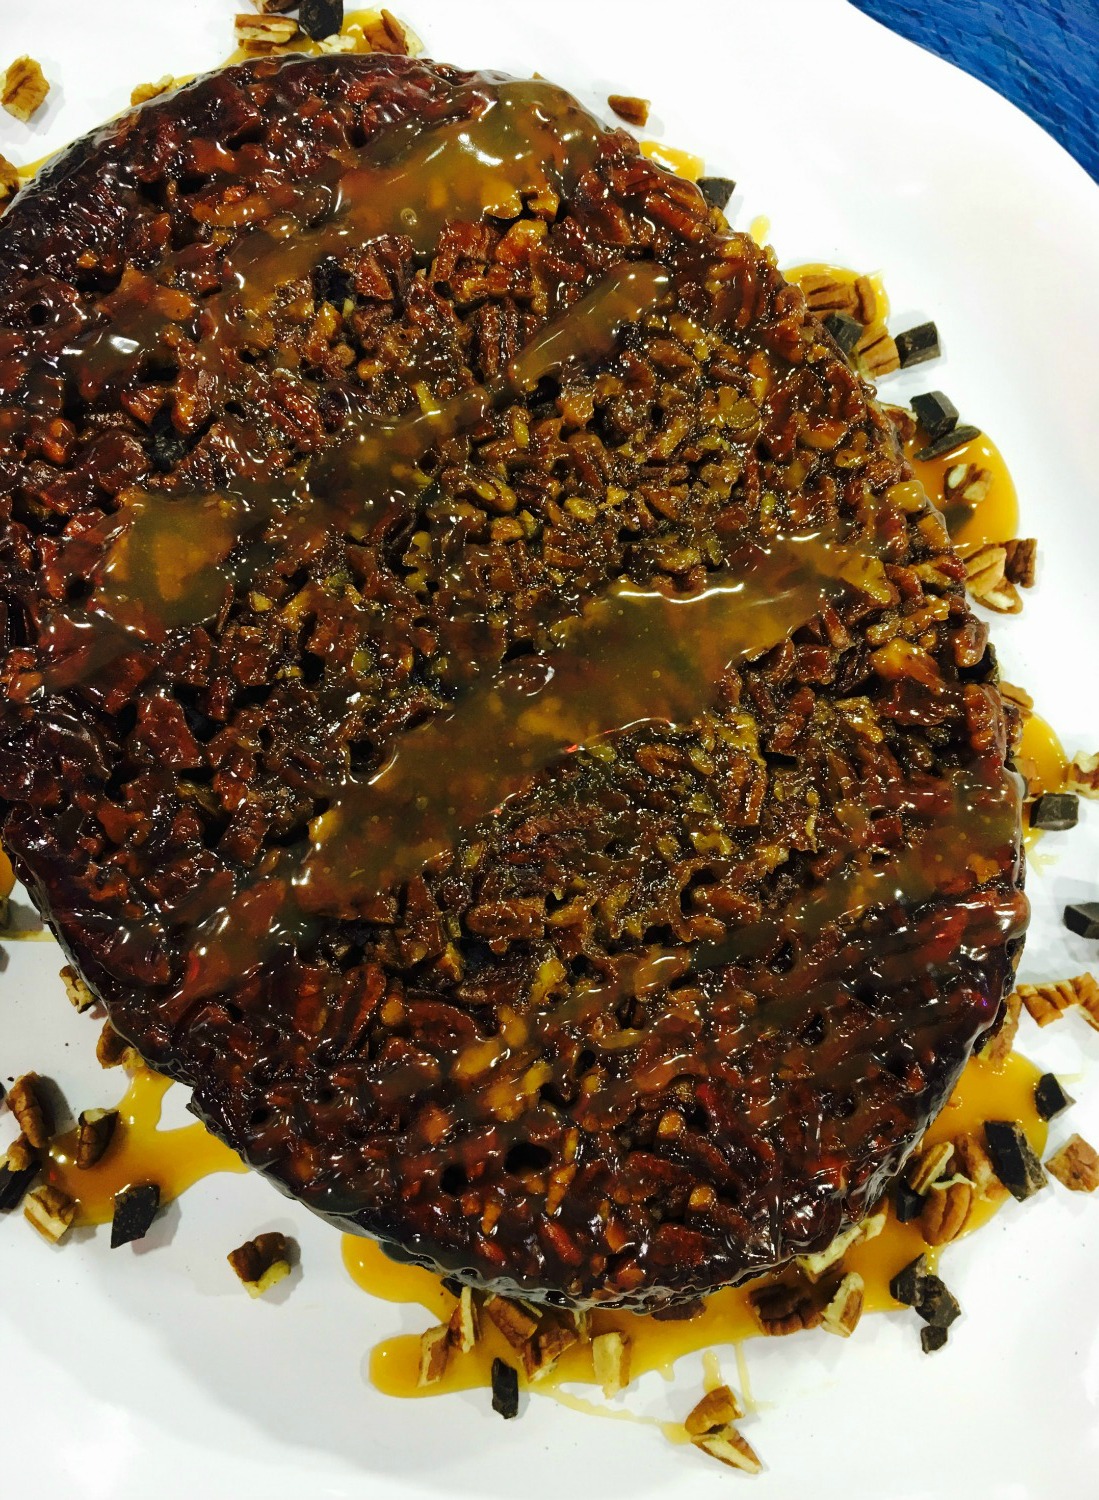 Chocolate Caramel Pecan Upside-Down Cake – The Best of Bridge